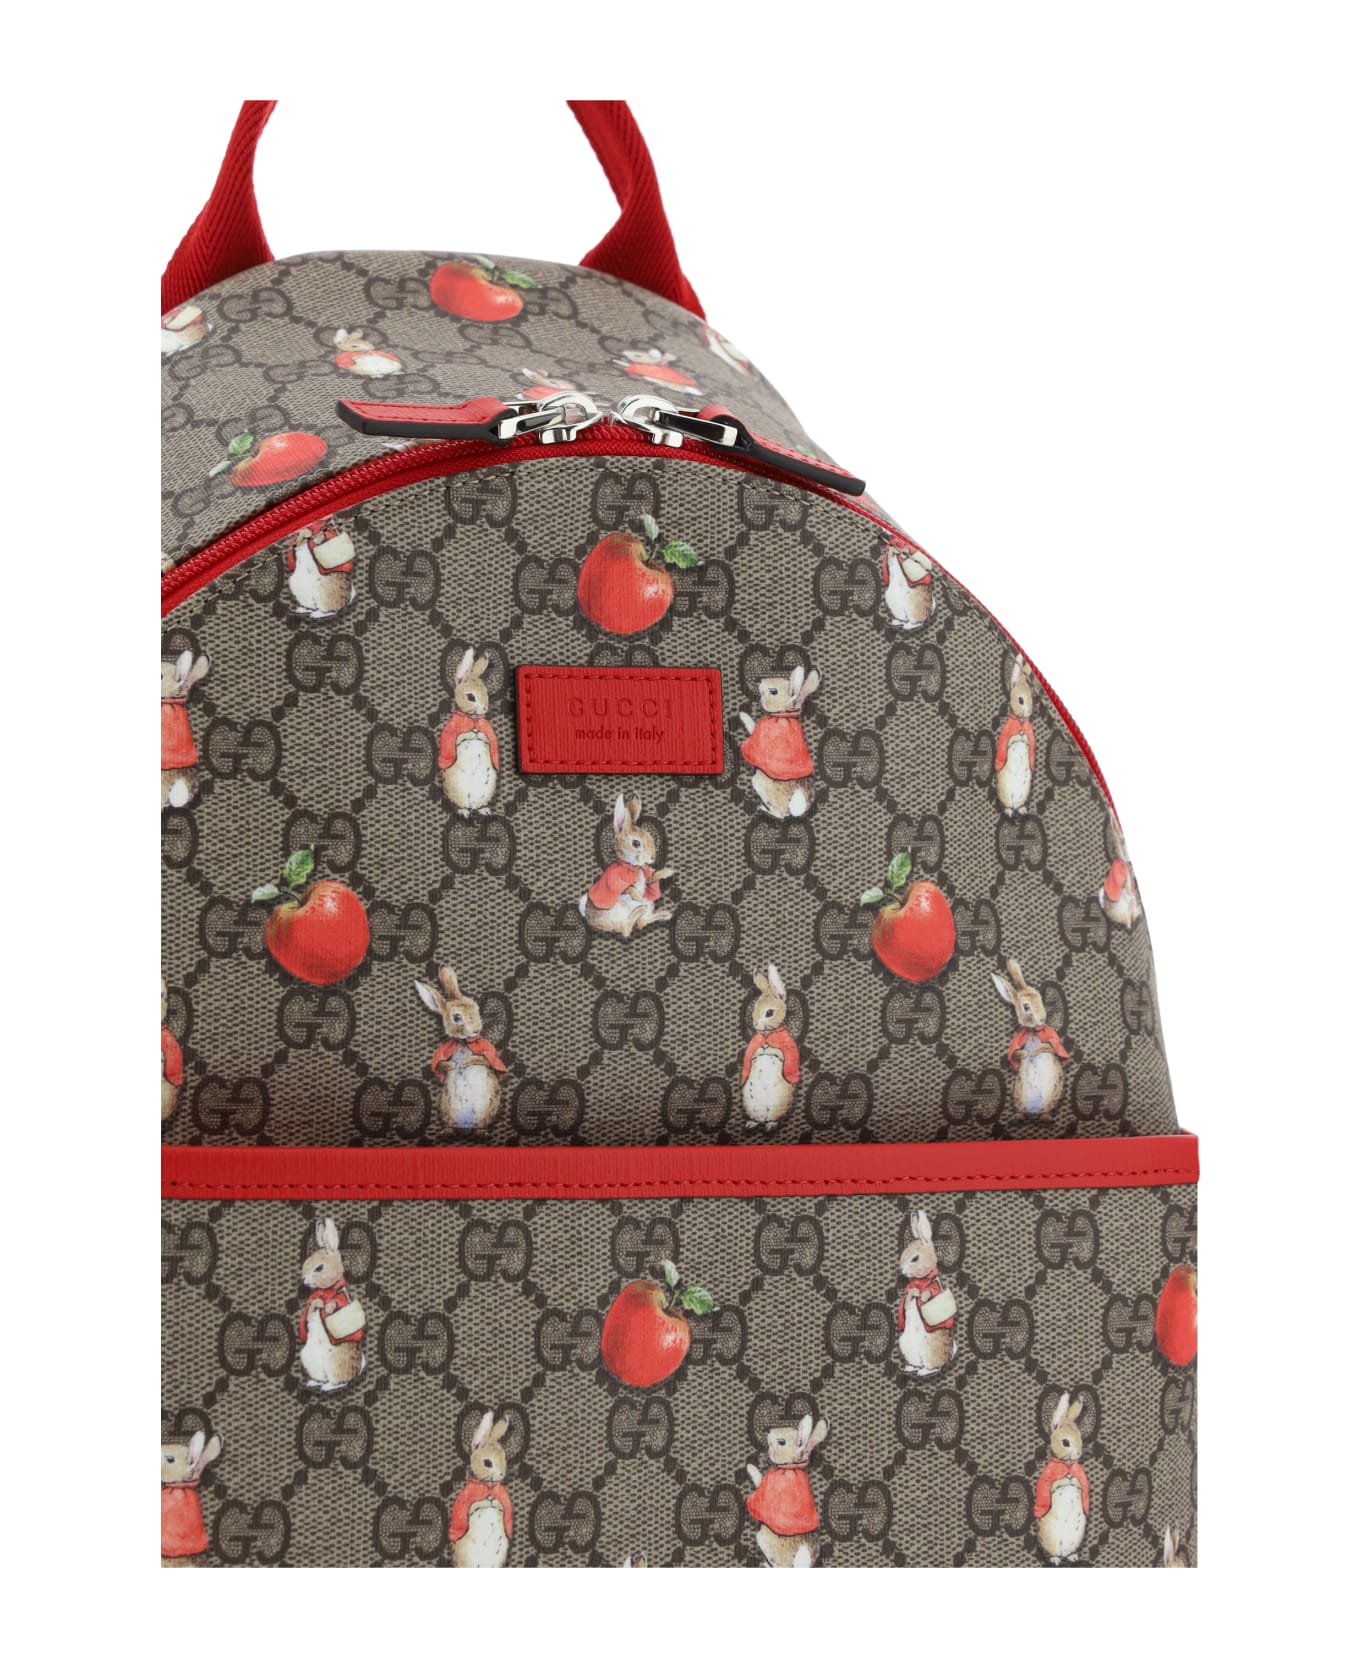 Gucci Peter Rabbit Backpack アクセサリー＆ギフト